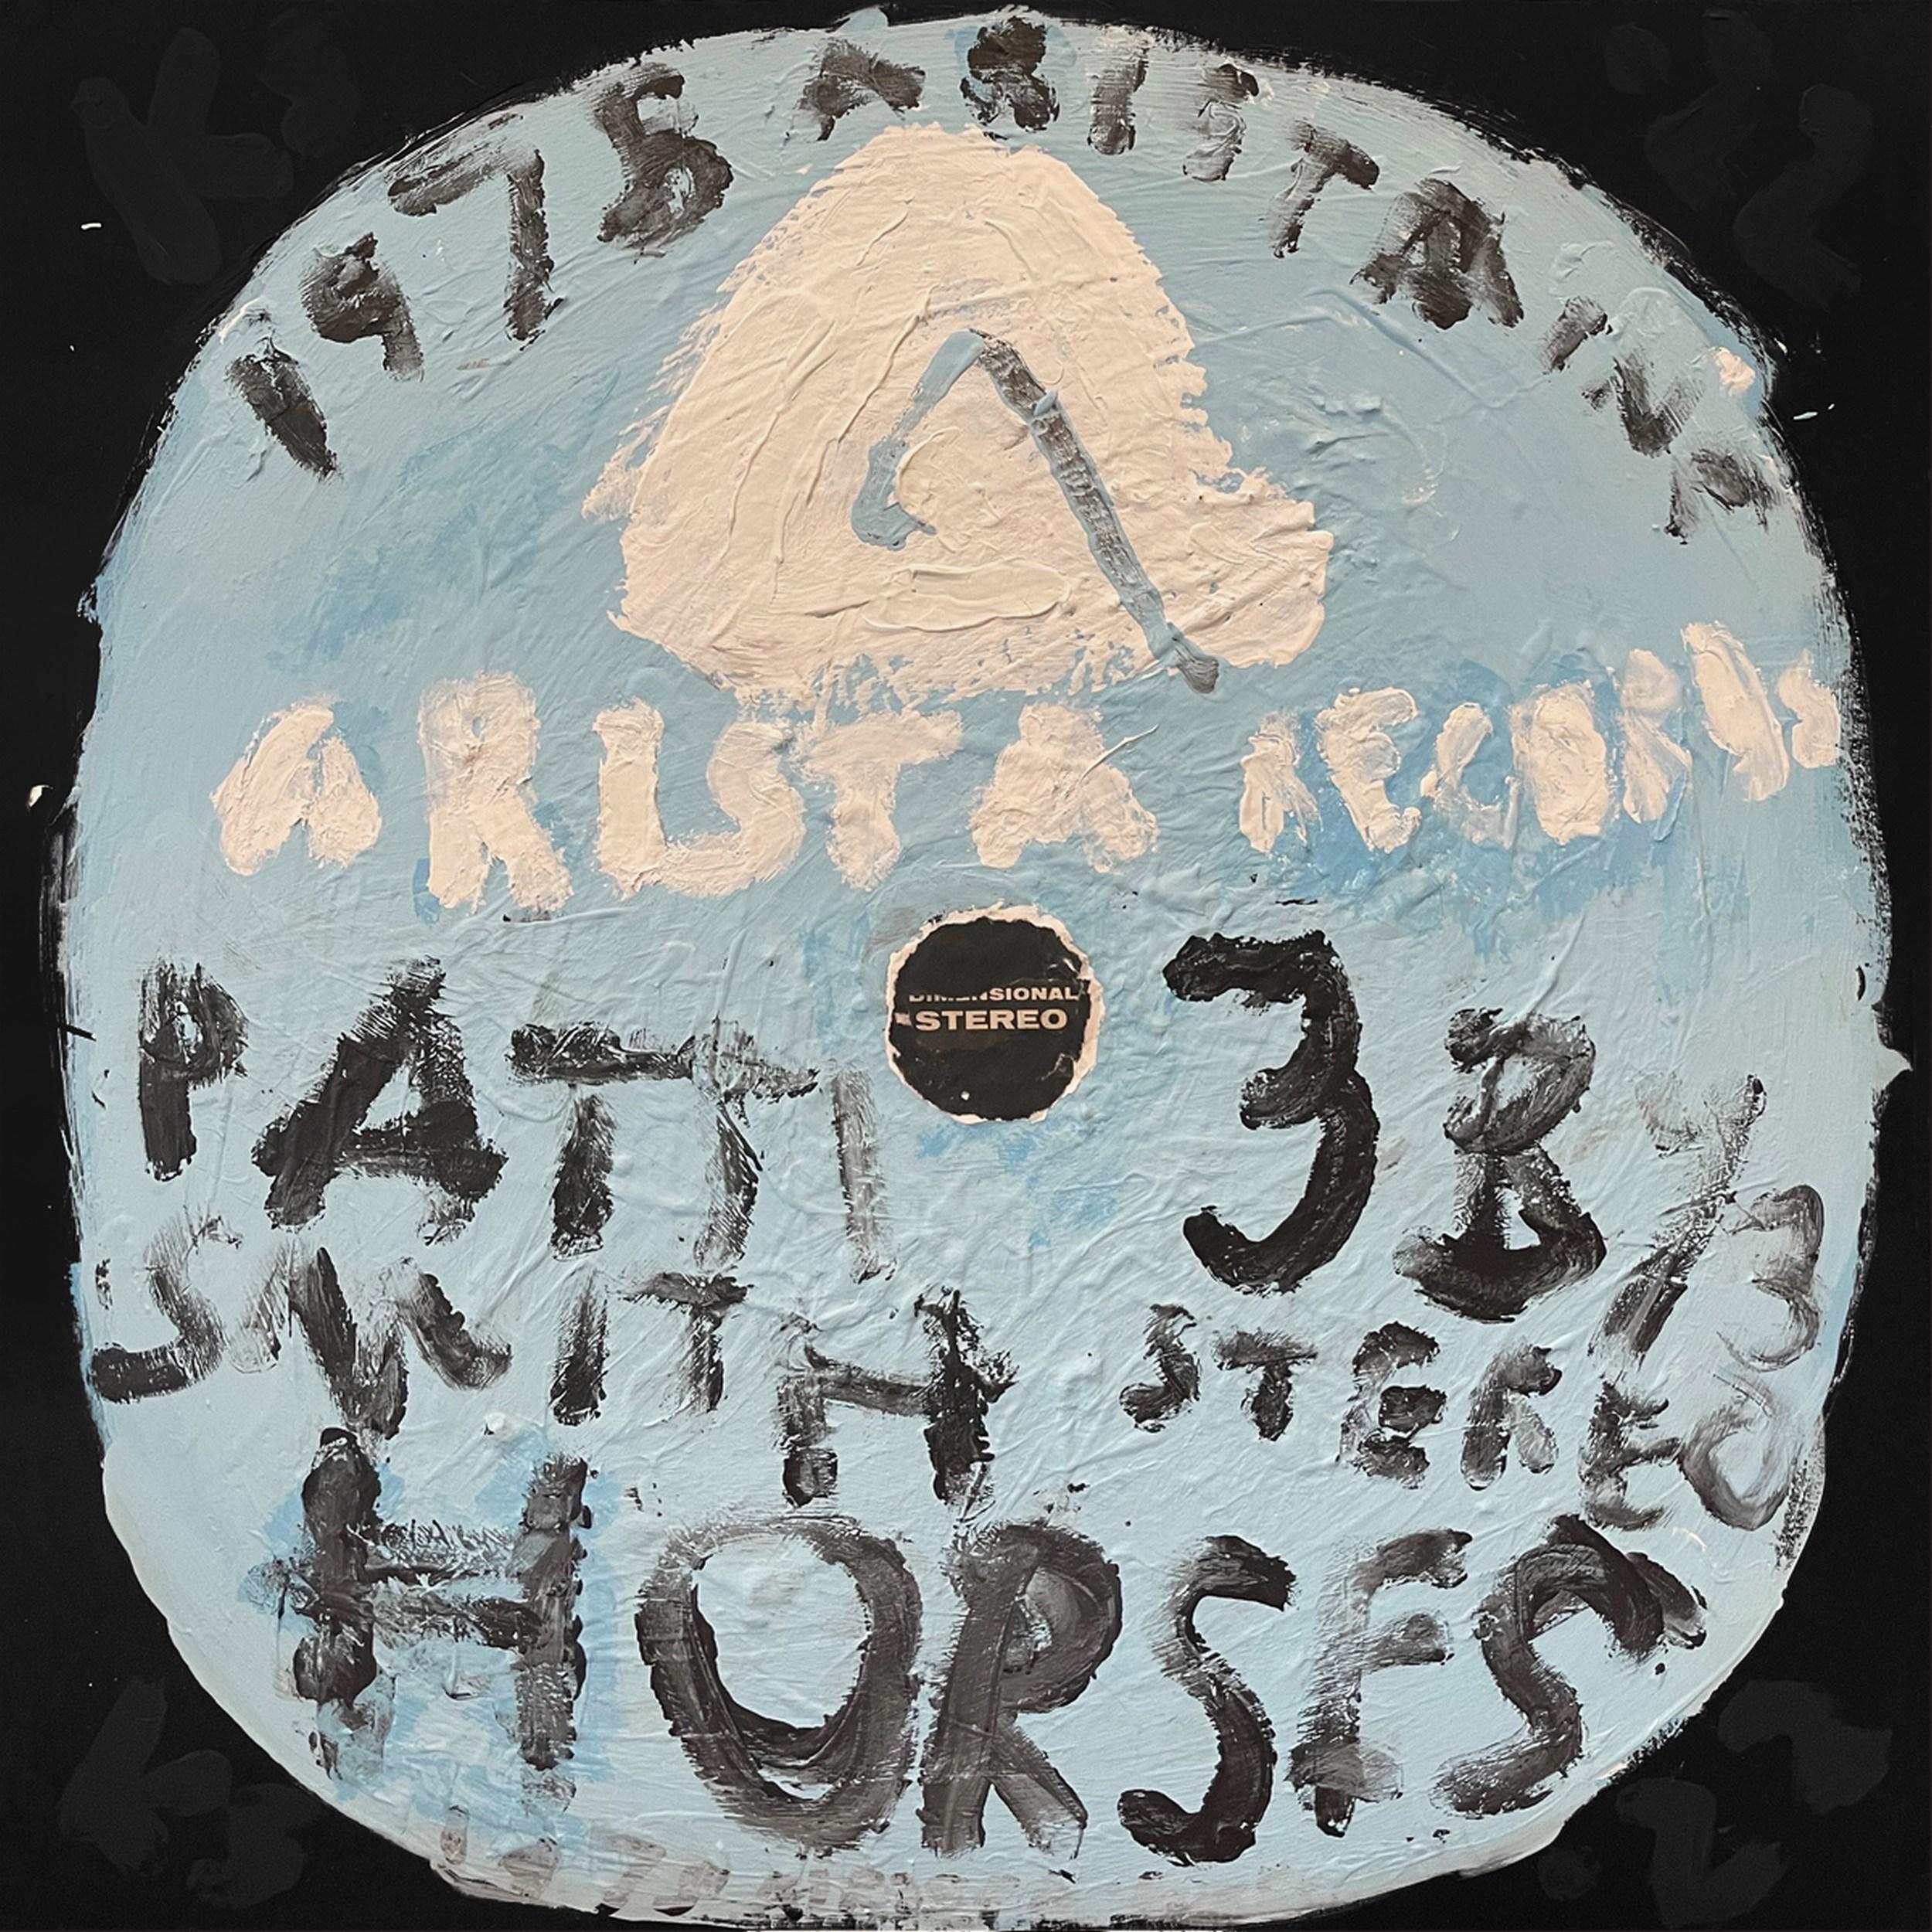 Kerry Smith Figurative Painting - Patti Smith - Horses (Grammy, Album Art, Iconic, Rock & Roll, Pop, Legend)